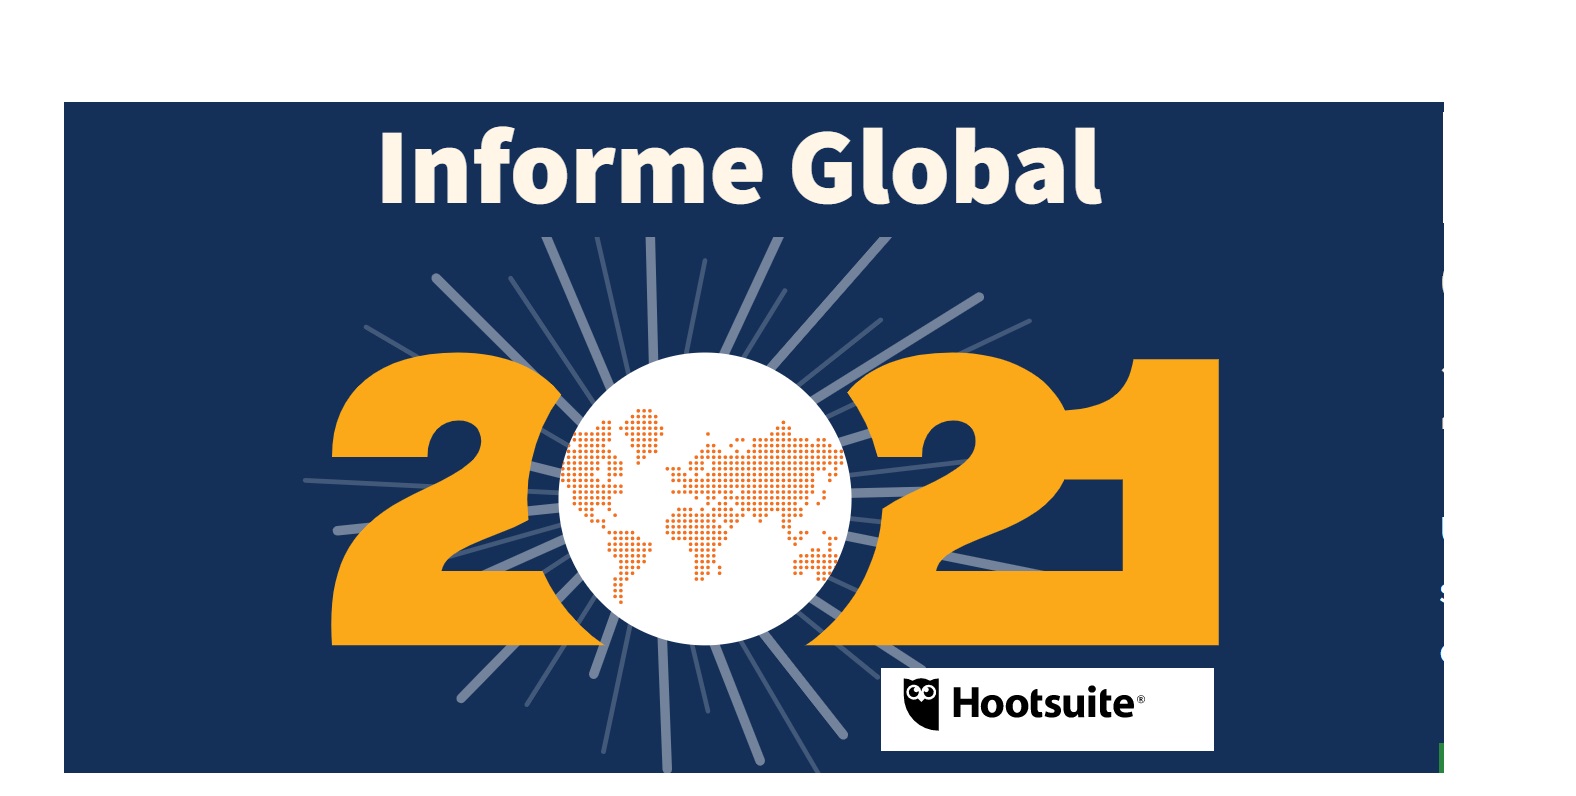 informe global, 2021, digital, hootsuite, programapublicidad